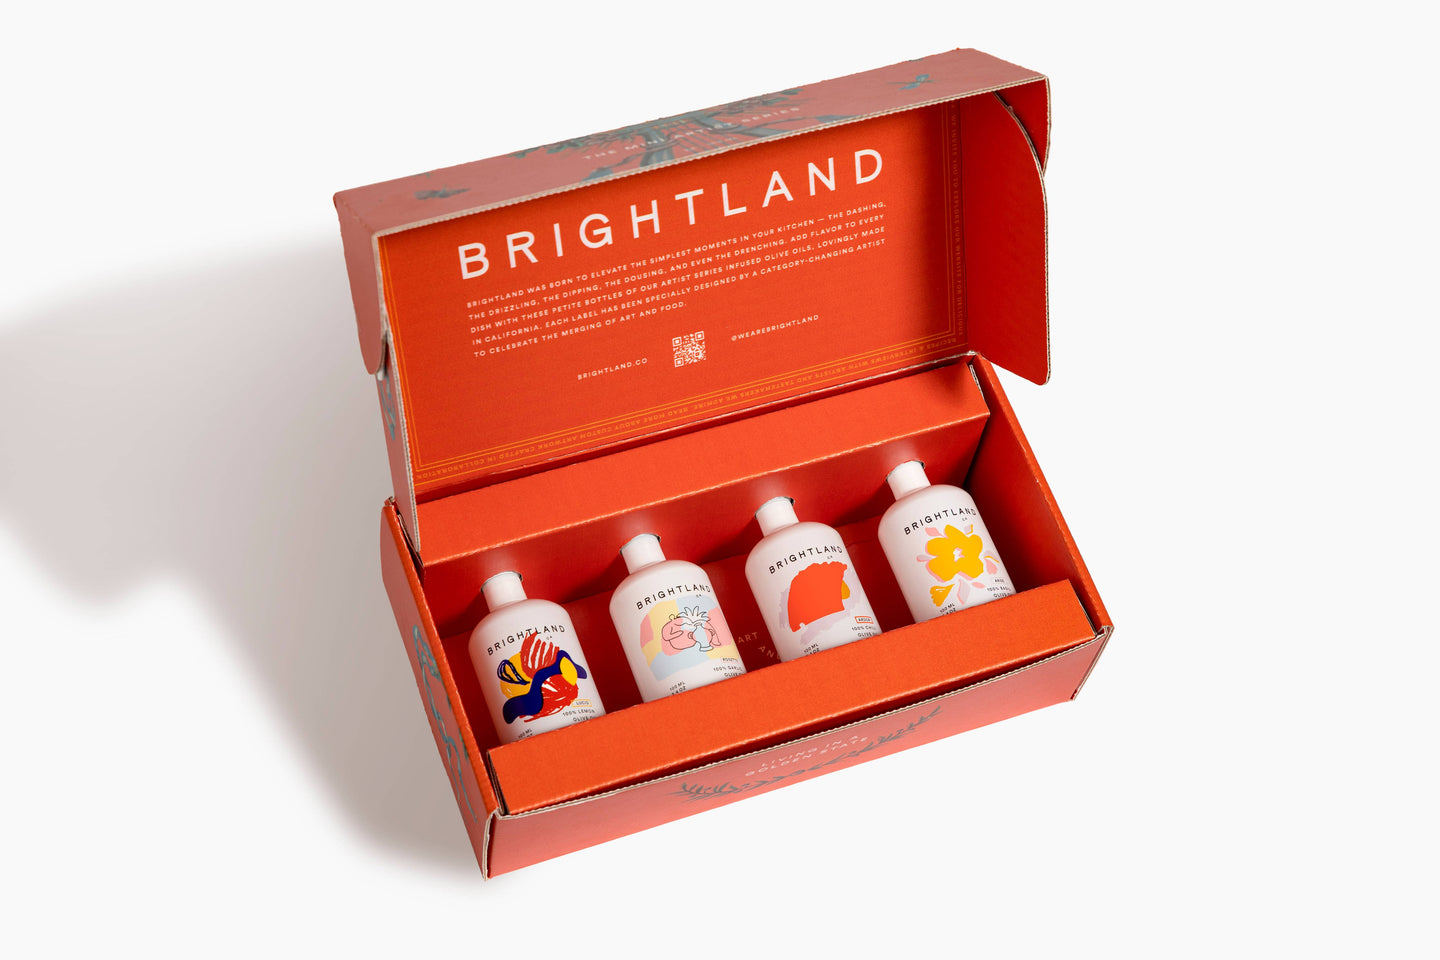 Brightland - The Mini Artist Series